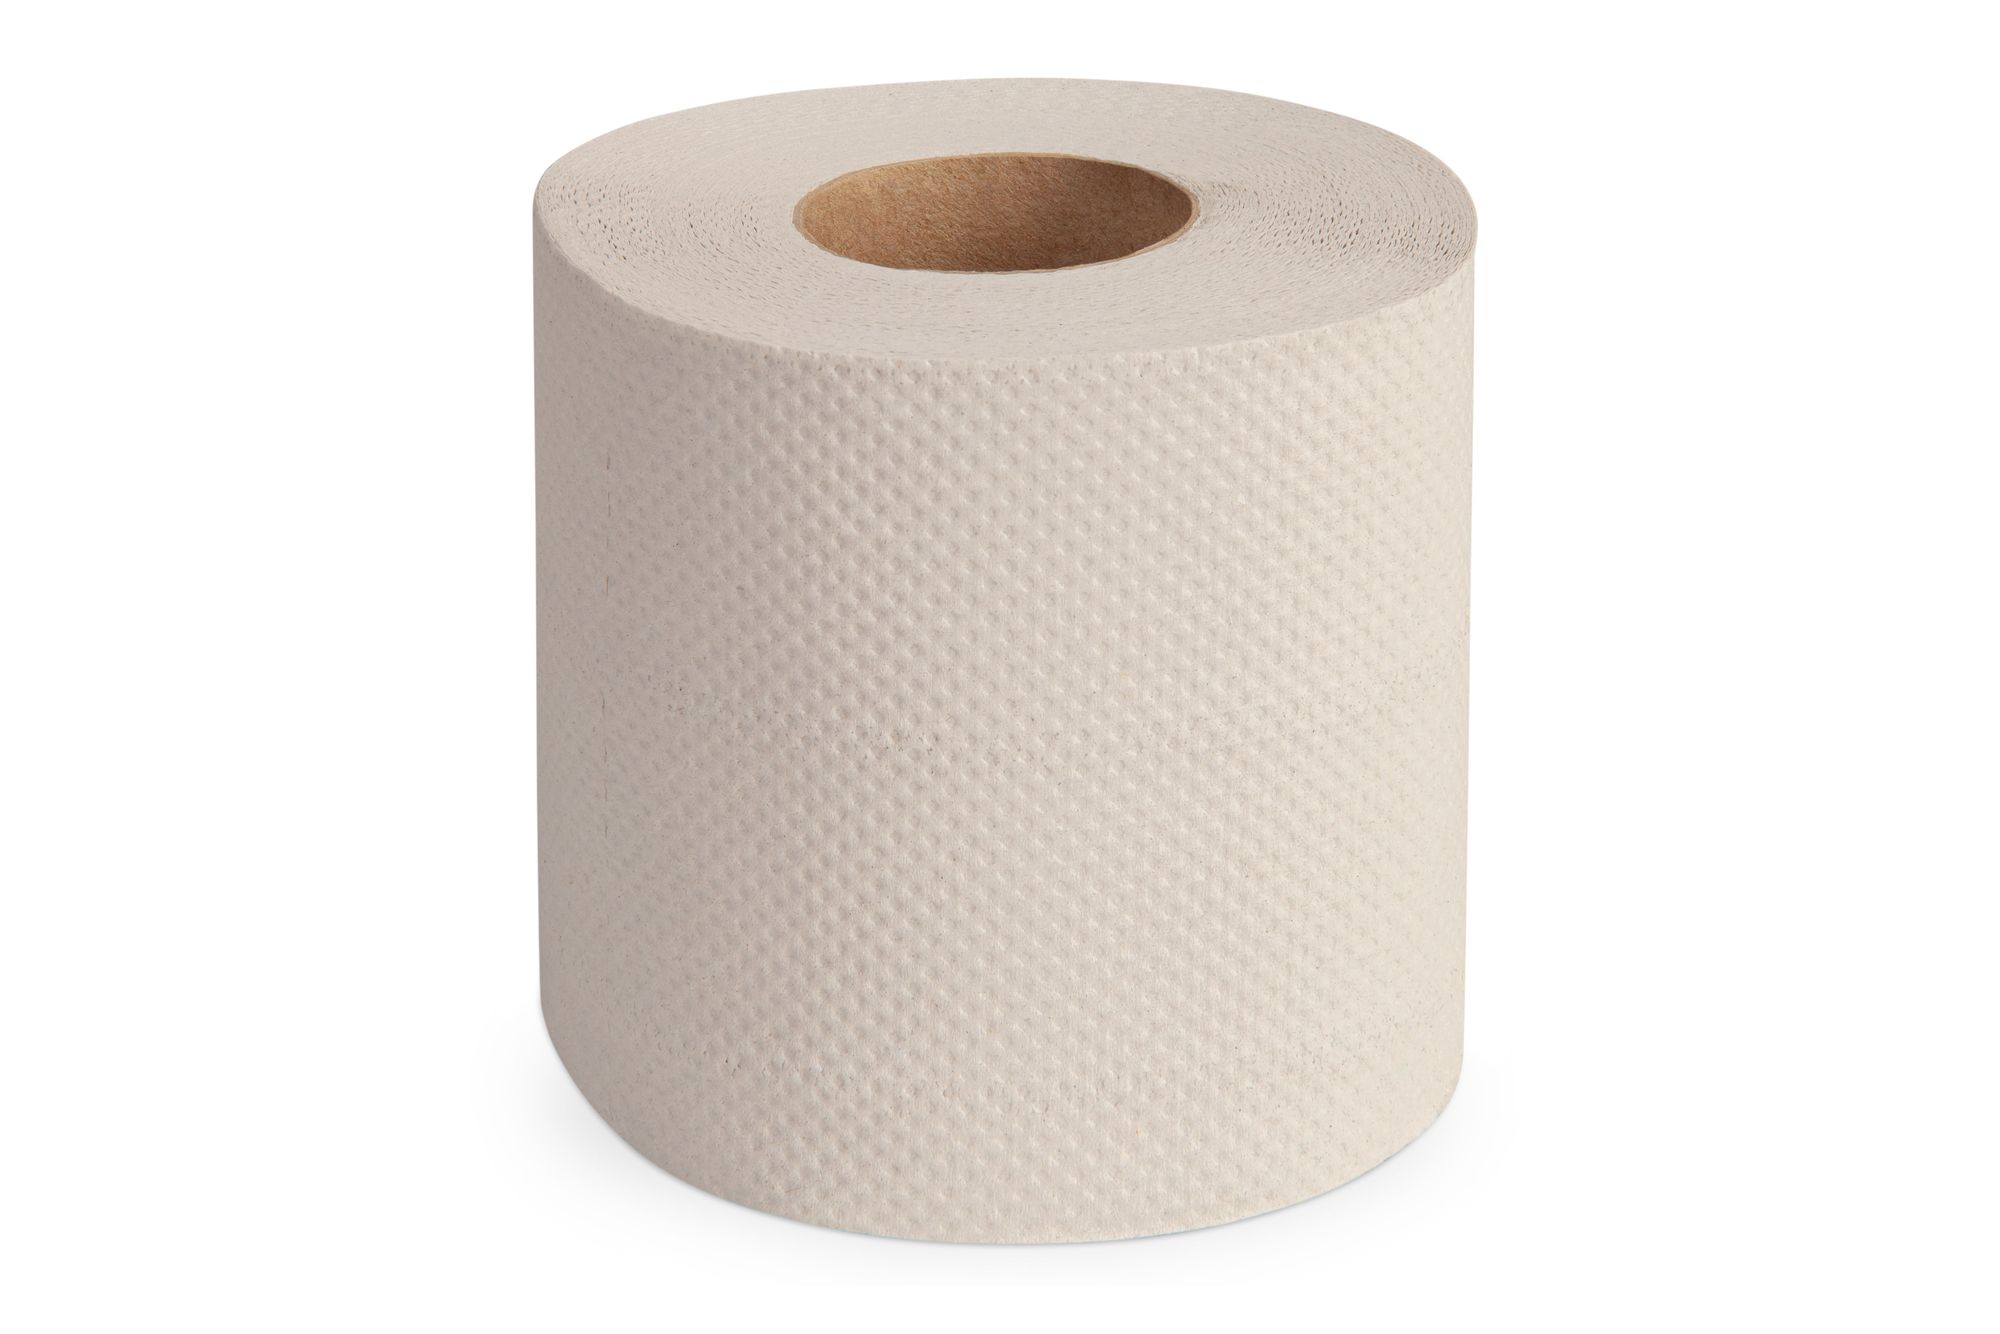 1 Palette Toilettenpapier Kleinrolle, 2-lagig, 250 Blatt, Recycling 2 x 17,0 g/m², weiß 65°, Blatt 9,5 x 11,5 cm, Ø Hülse 4cm, Ø Rolle 10,0cm